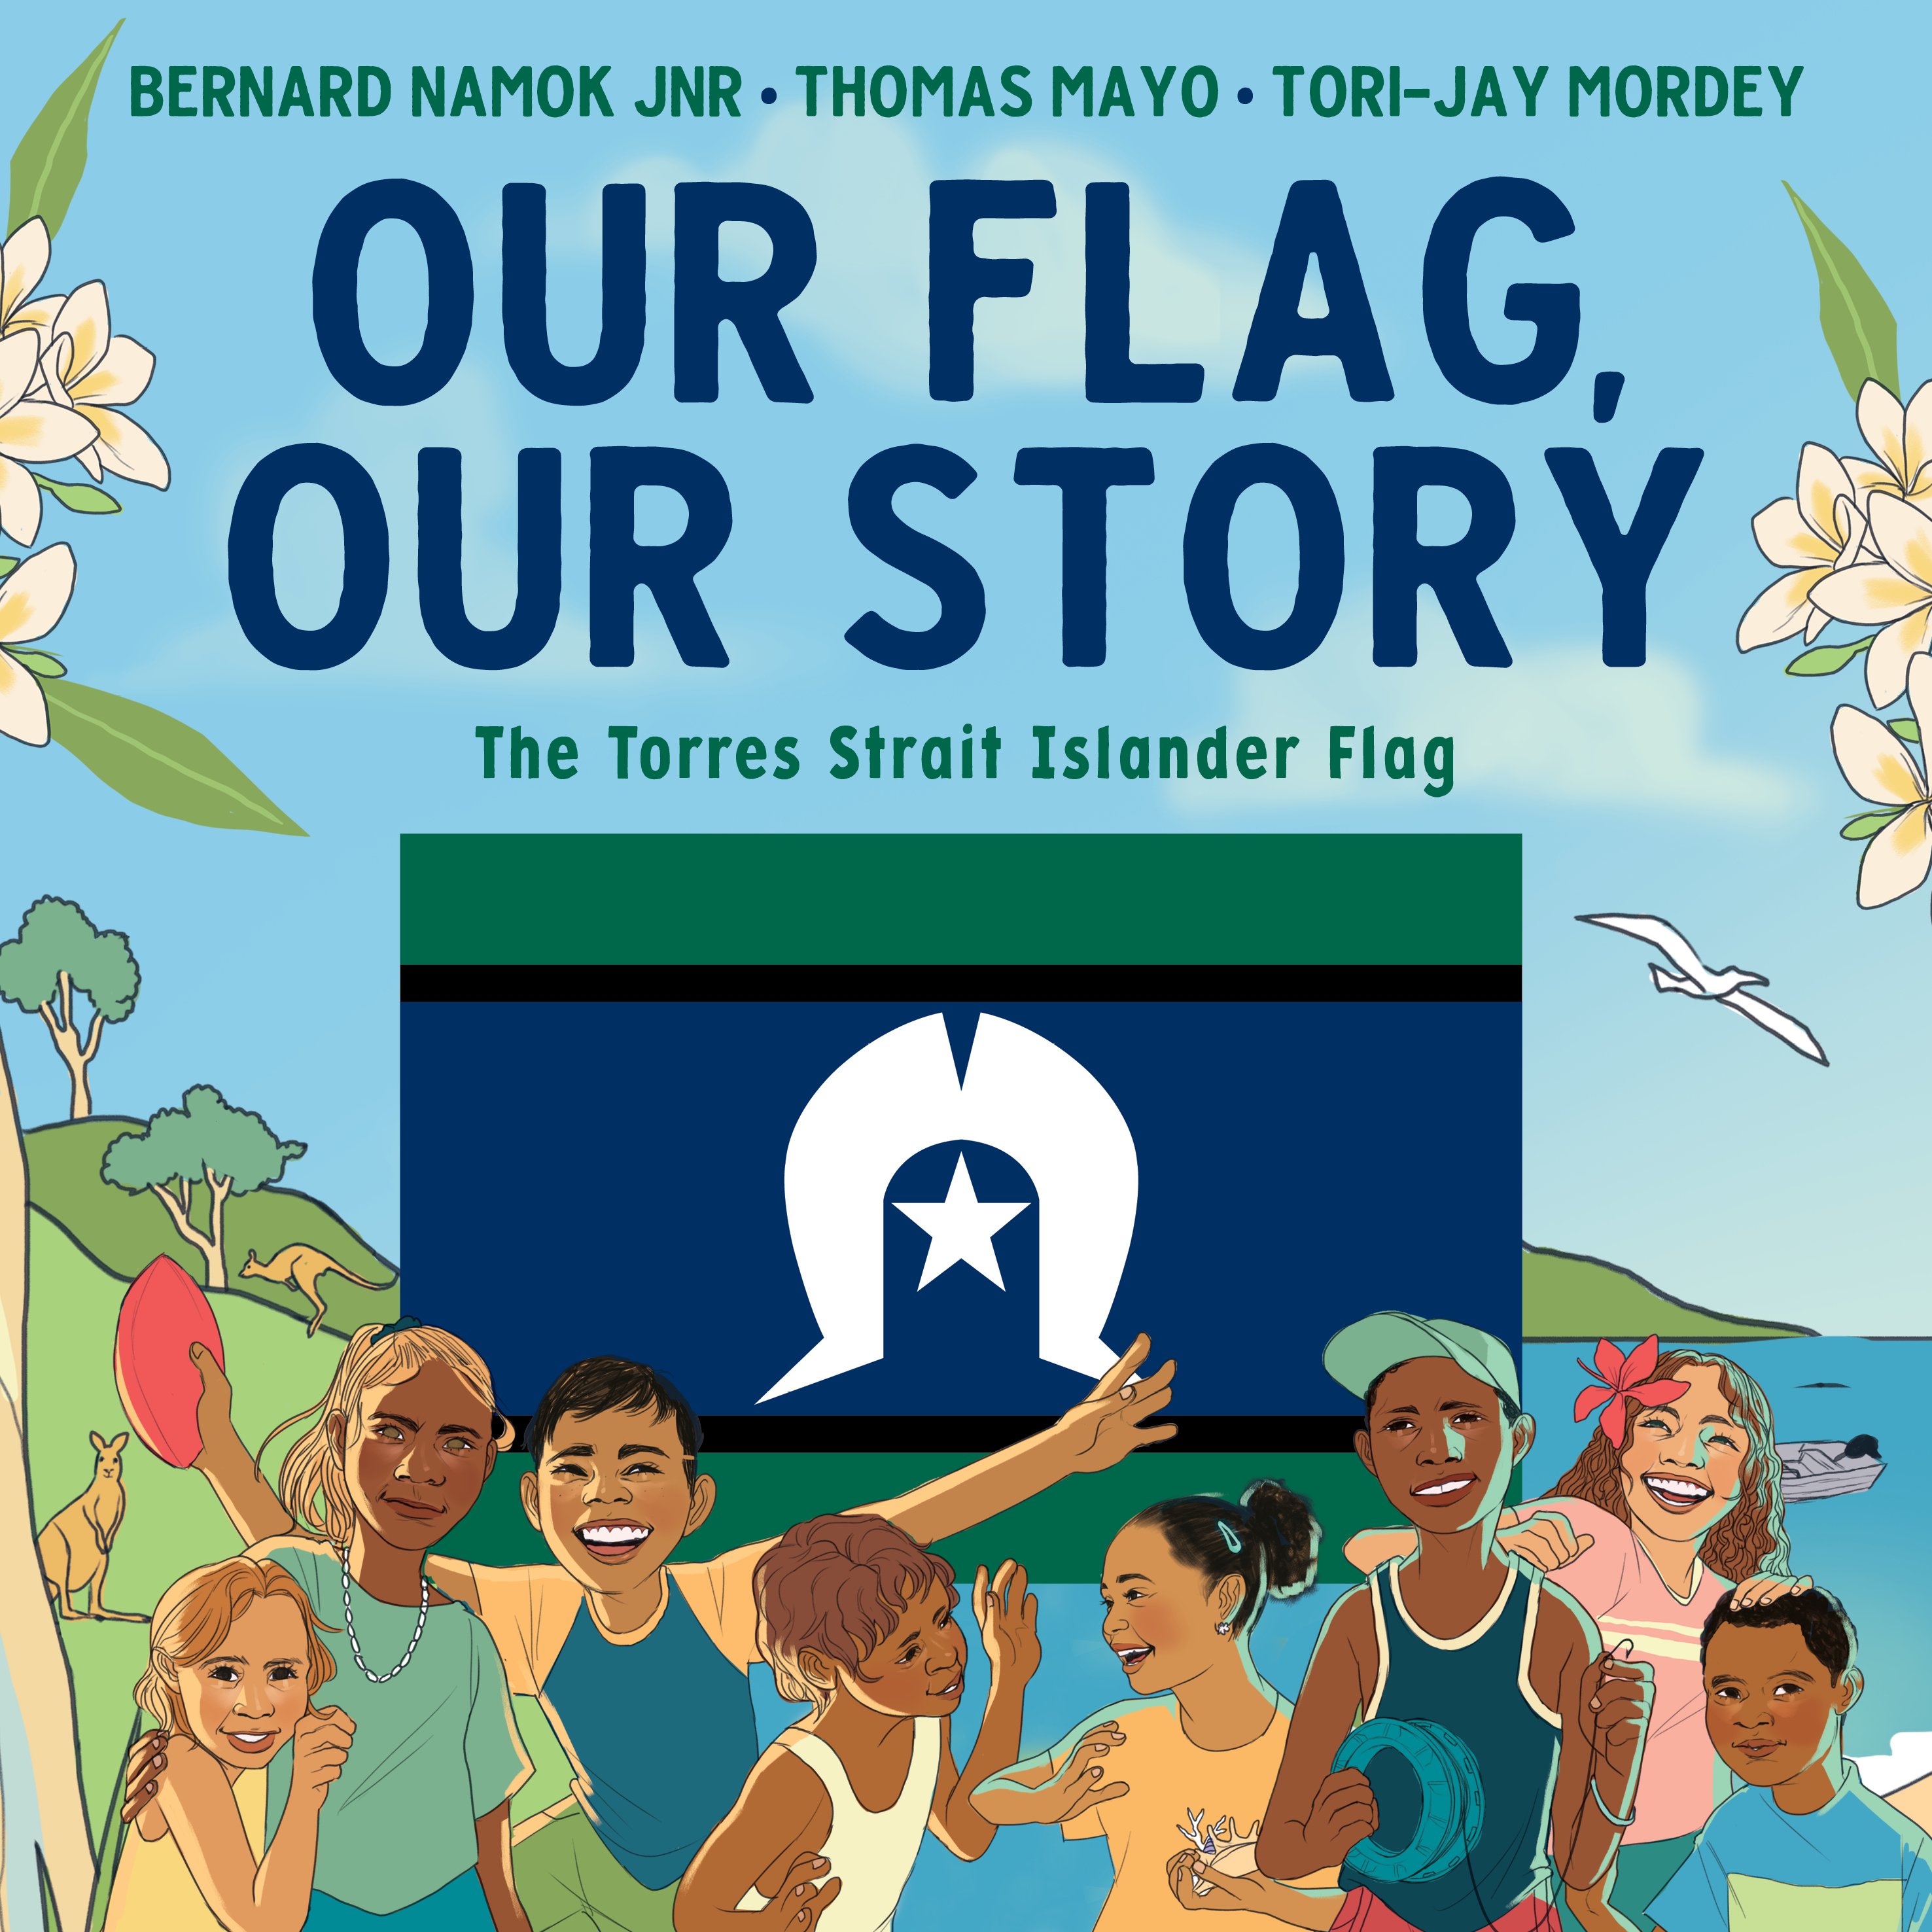 Our Flag, Our Story by Bernard Namok Jnr & Thomas Mayo